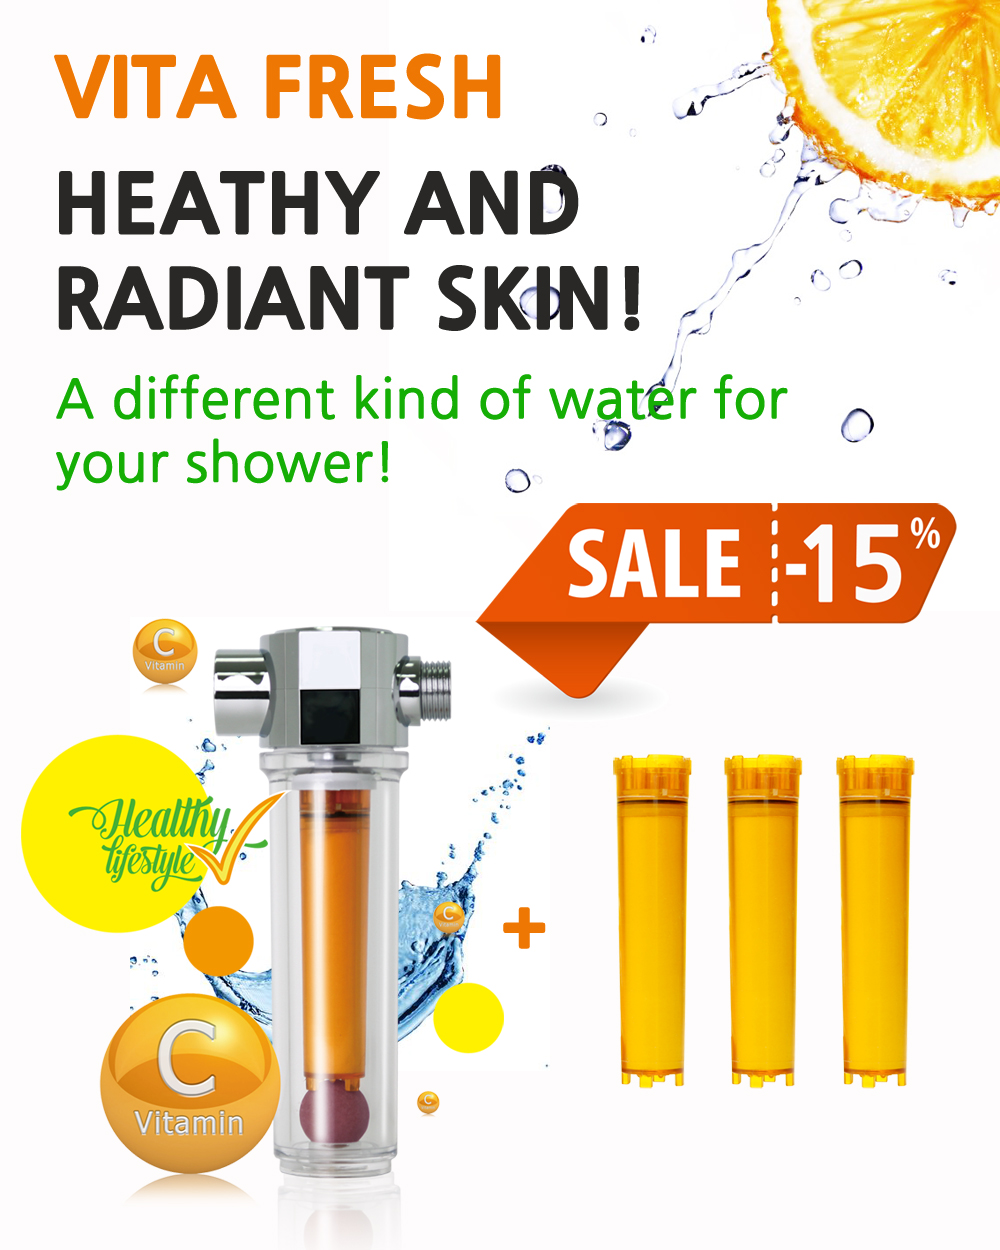 vita fresh shower filter promotion